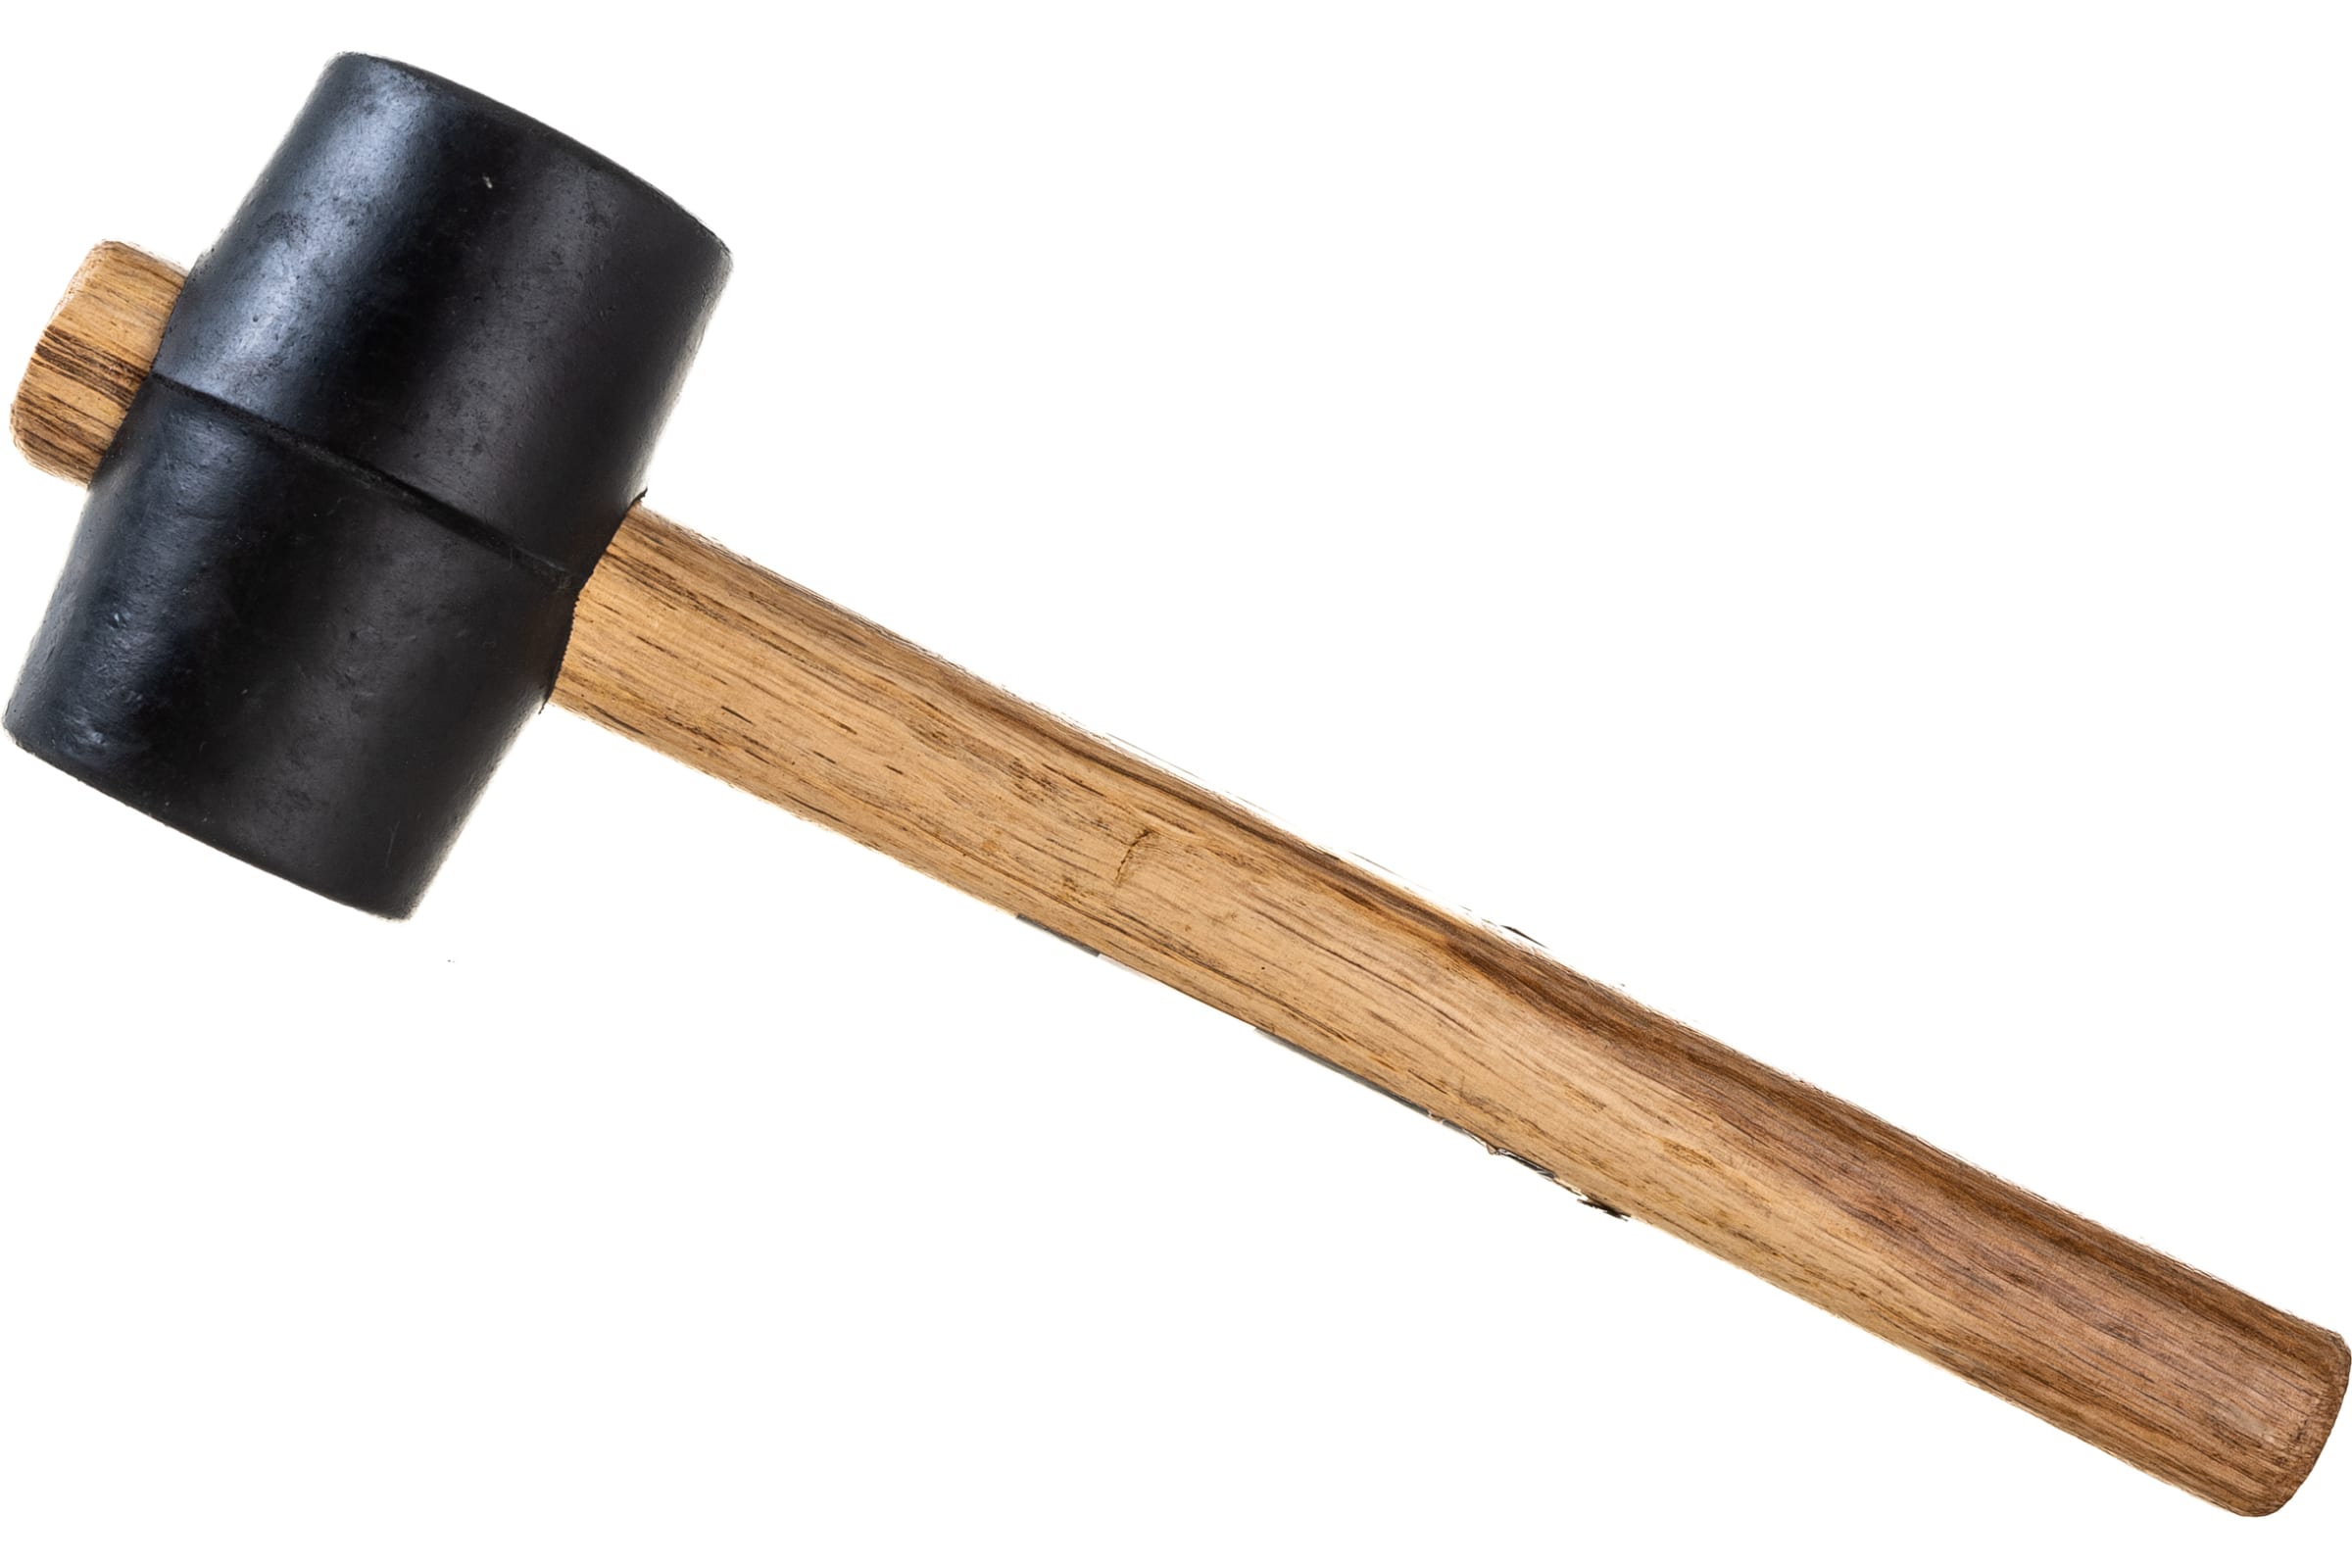 ULTIMA Киянка, деревянная рукоятка, 230 г, черная резина, 121040 киянка ultima